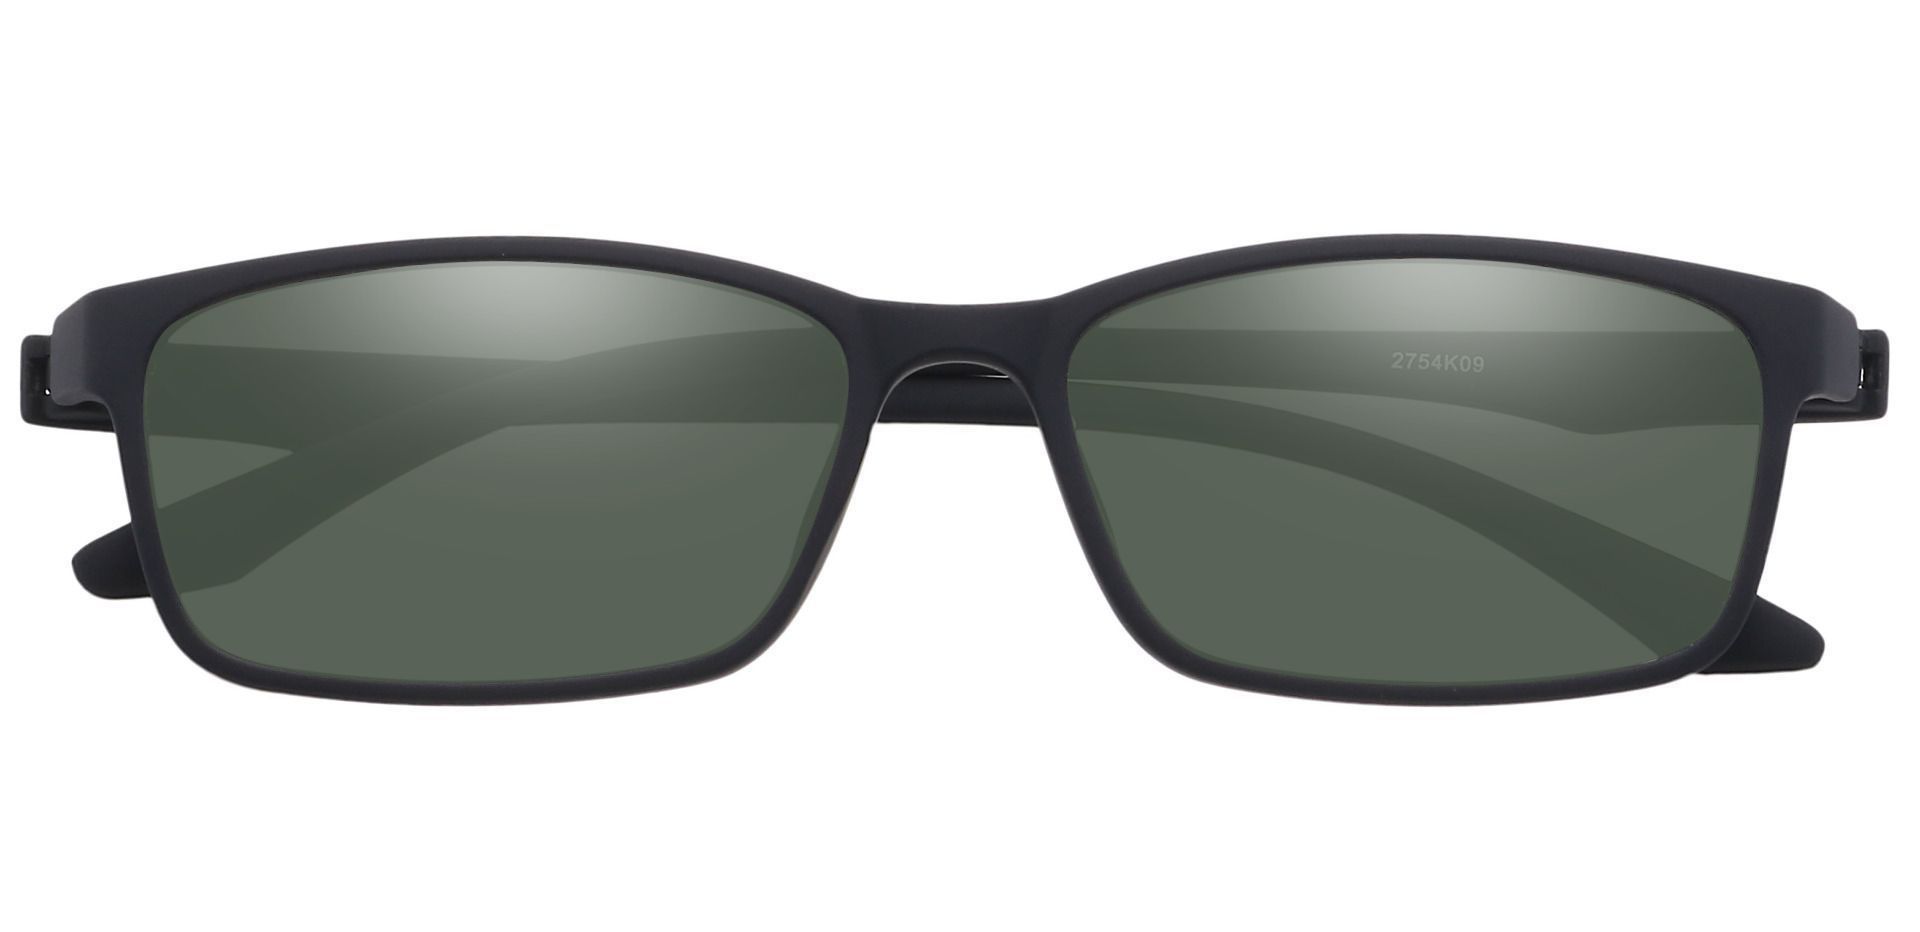 Wichita Rectangle Progressive Sunglasses - Black Frame With Green Lenses